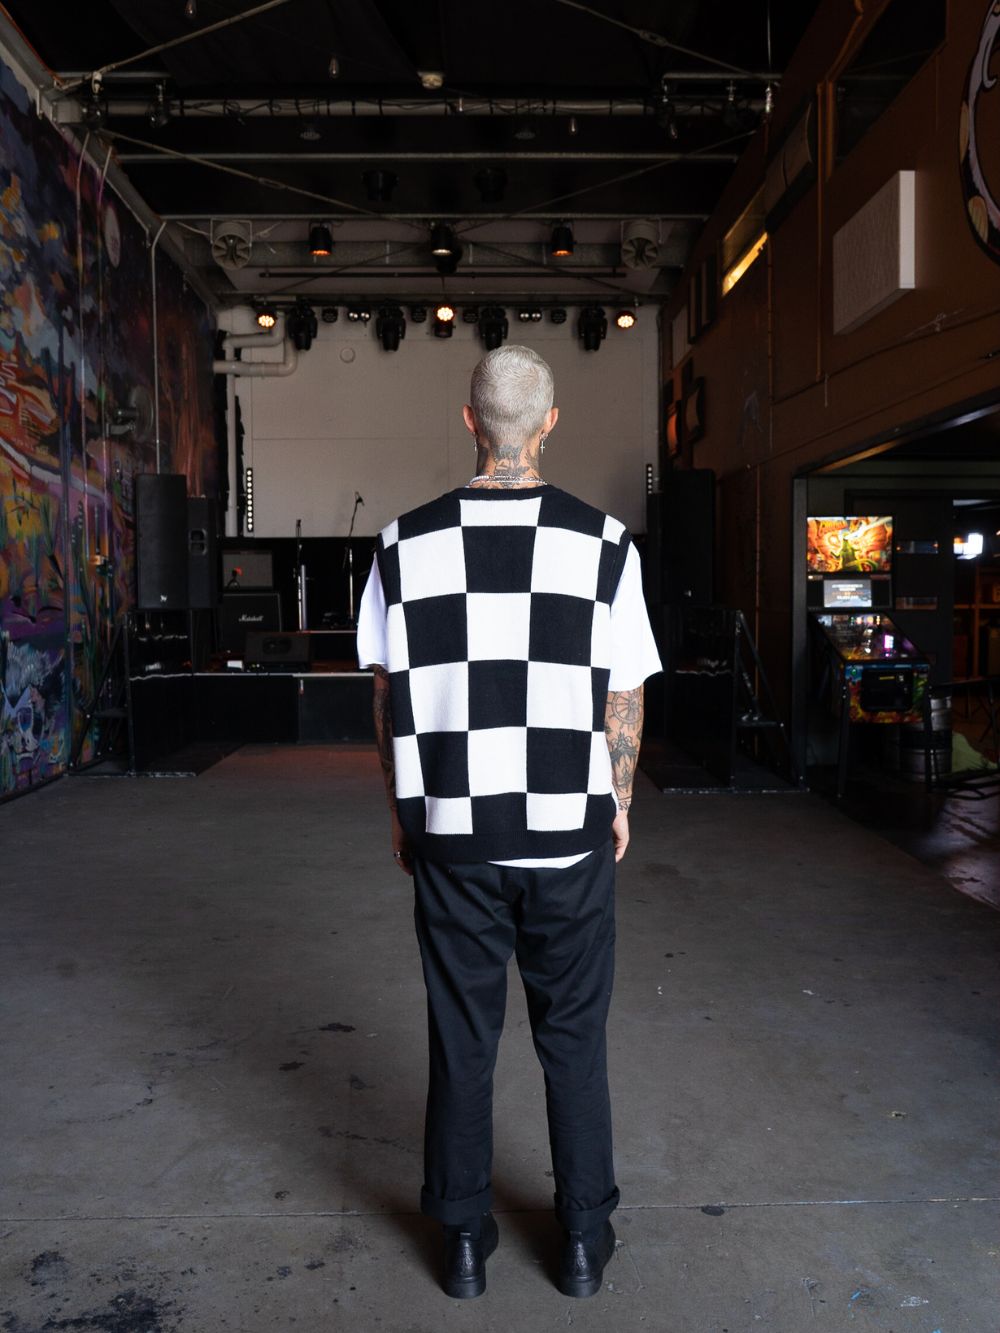 Checkered Knit Vest